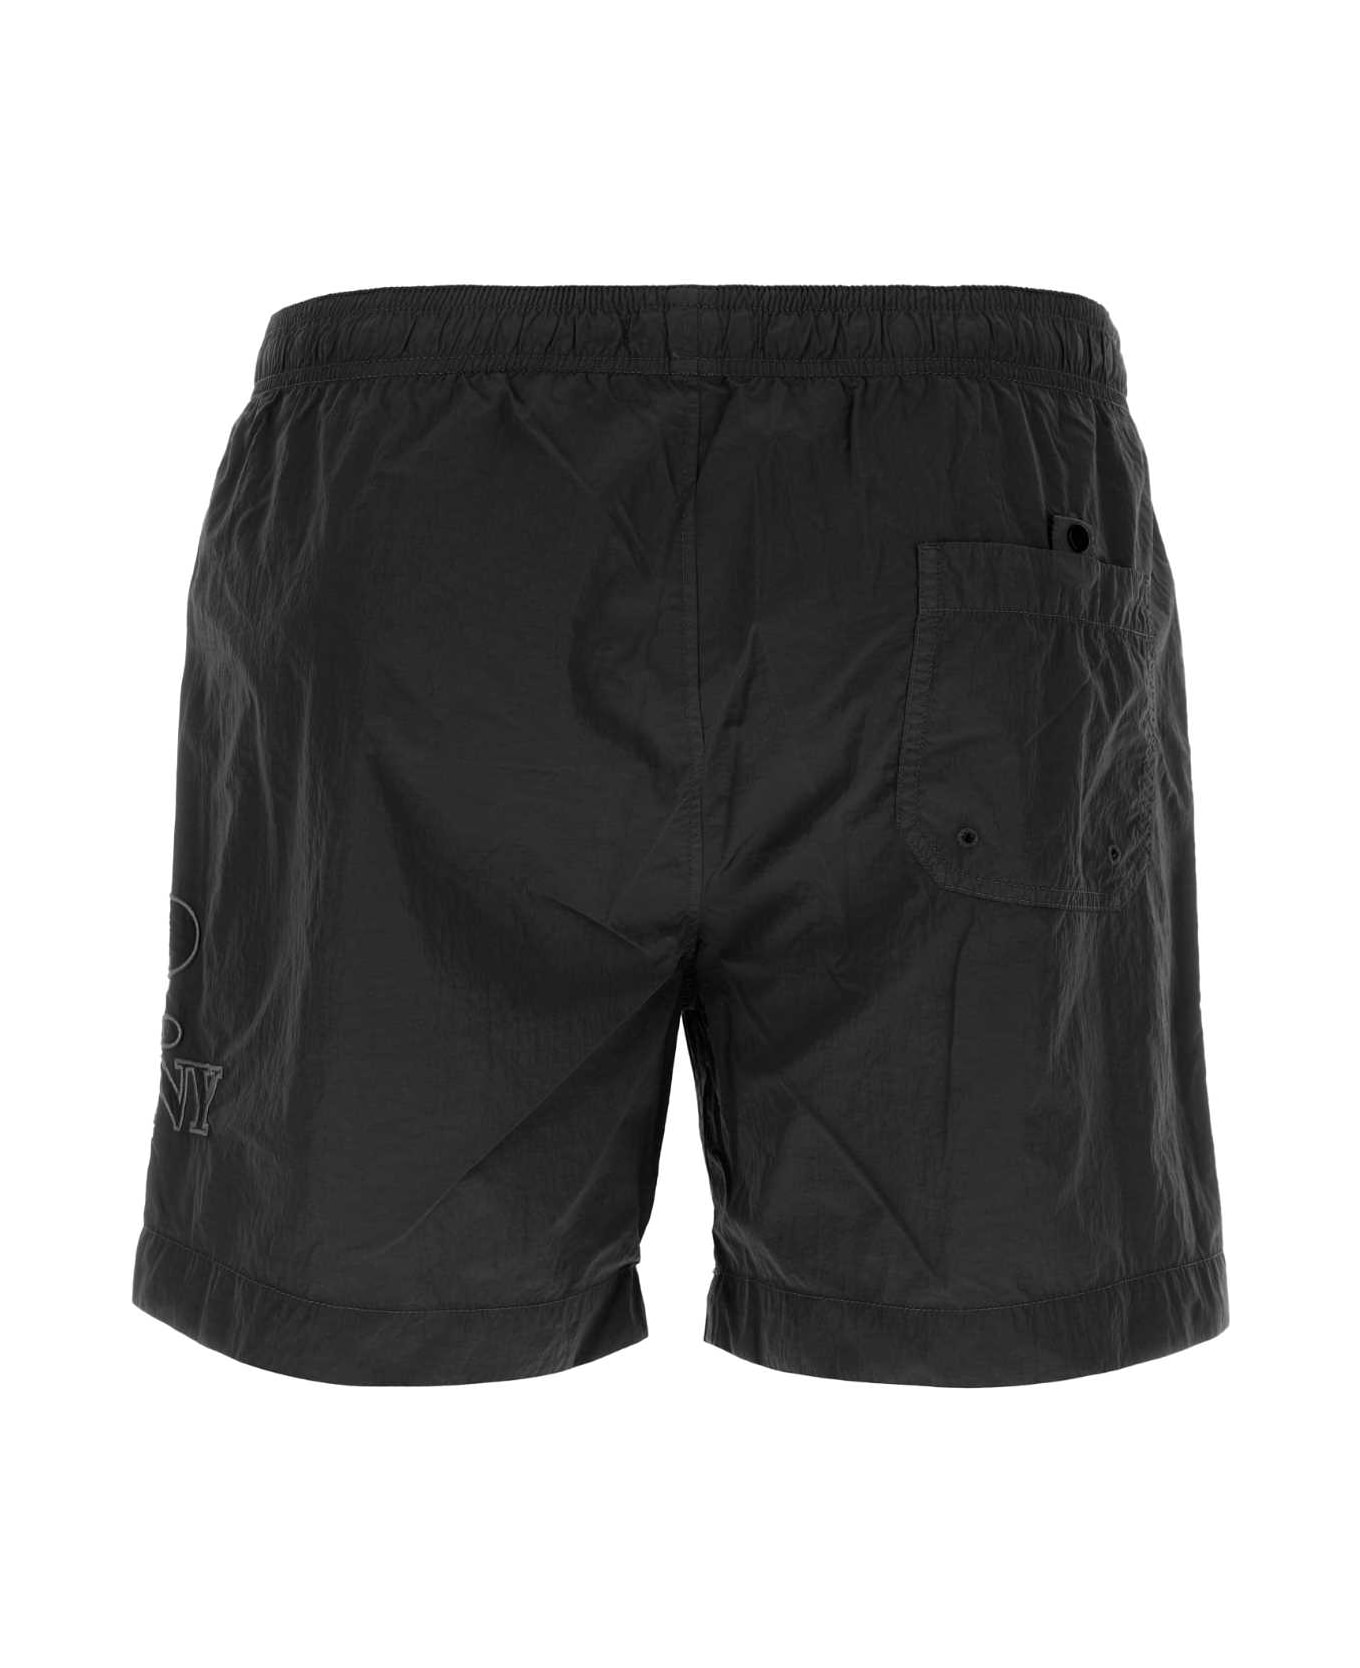 C.P. Company Black Nylon Swimming Shorts - Black 水着